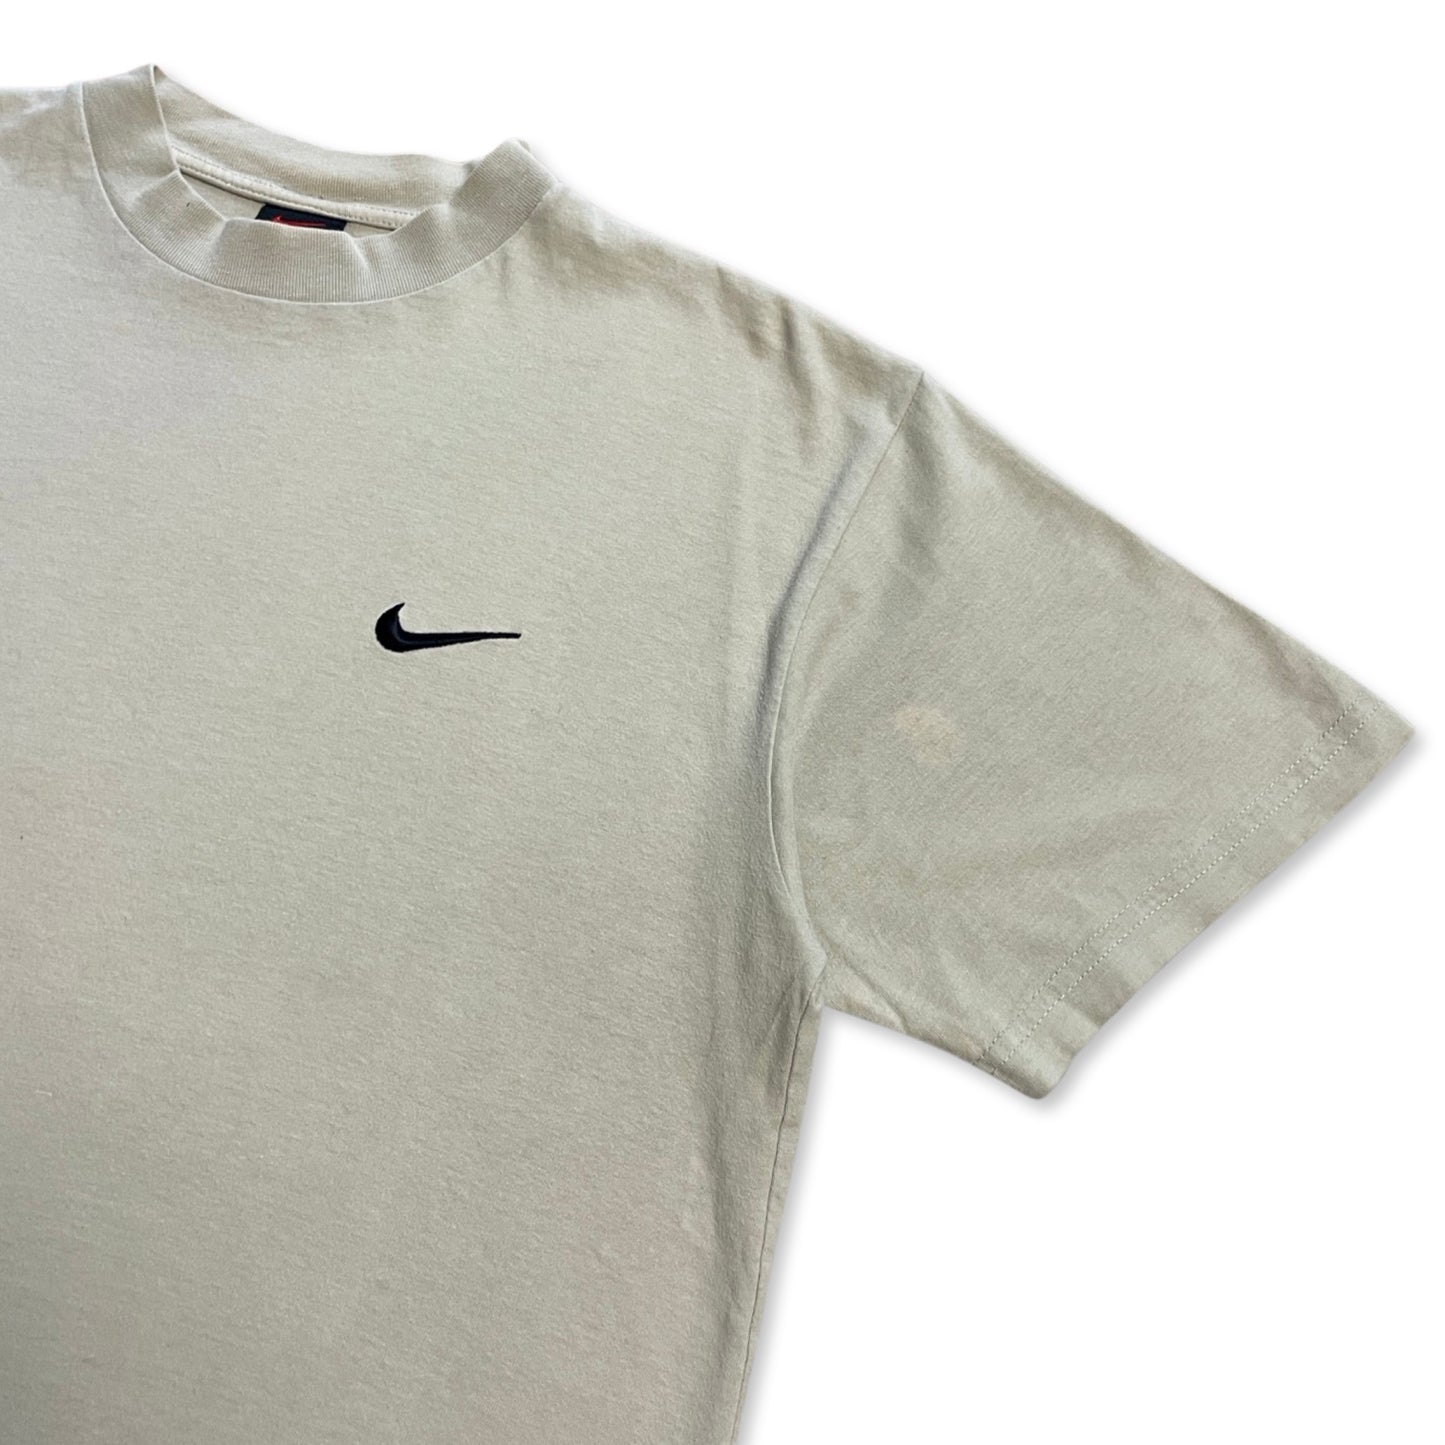 Vintage Nike Side Swoosh Tee (Fits Medium) *light stain in the sleeves